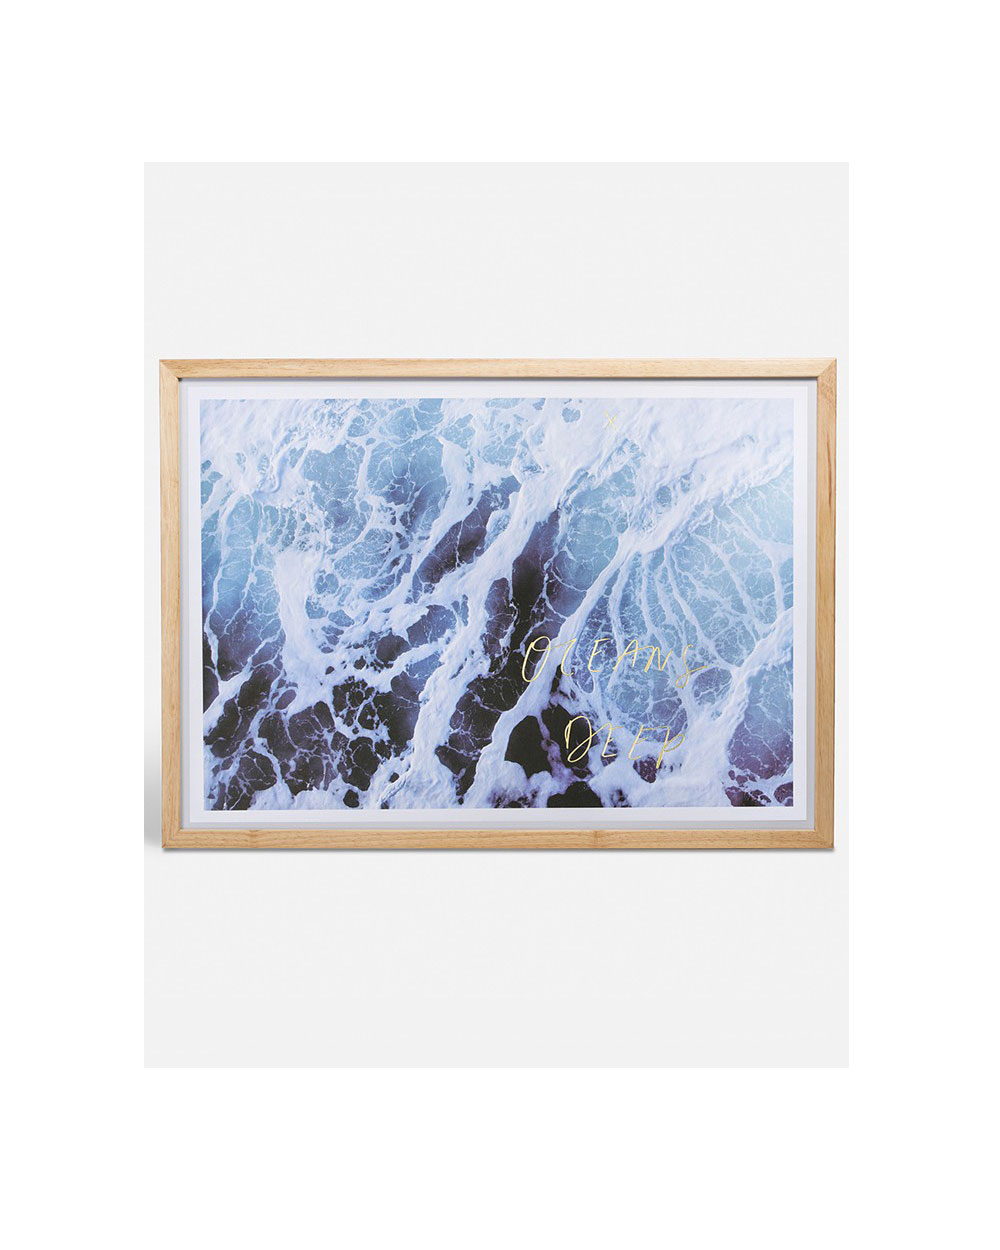 Oceans-Deep-timber-framed-print-from-Superette_$329